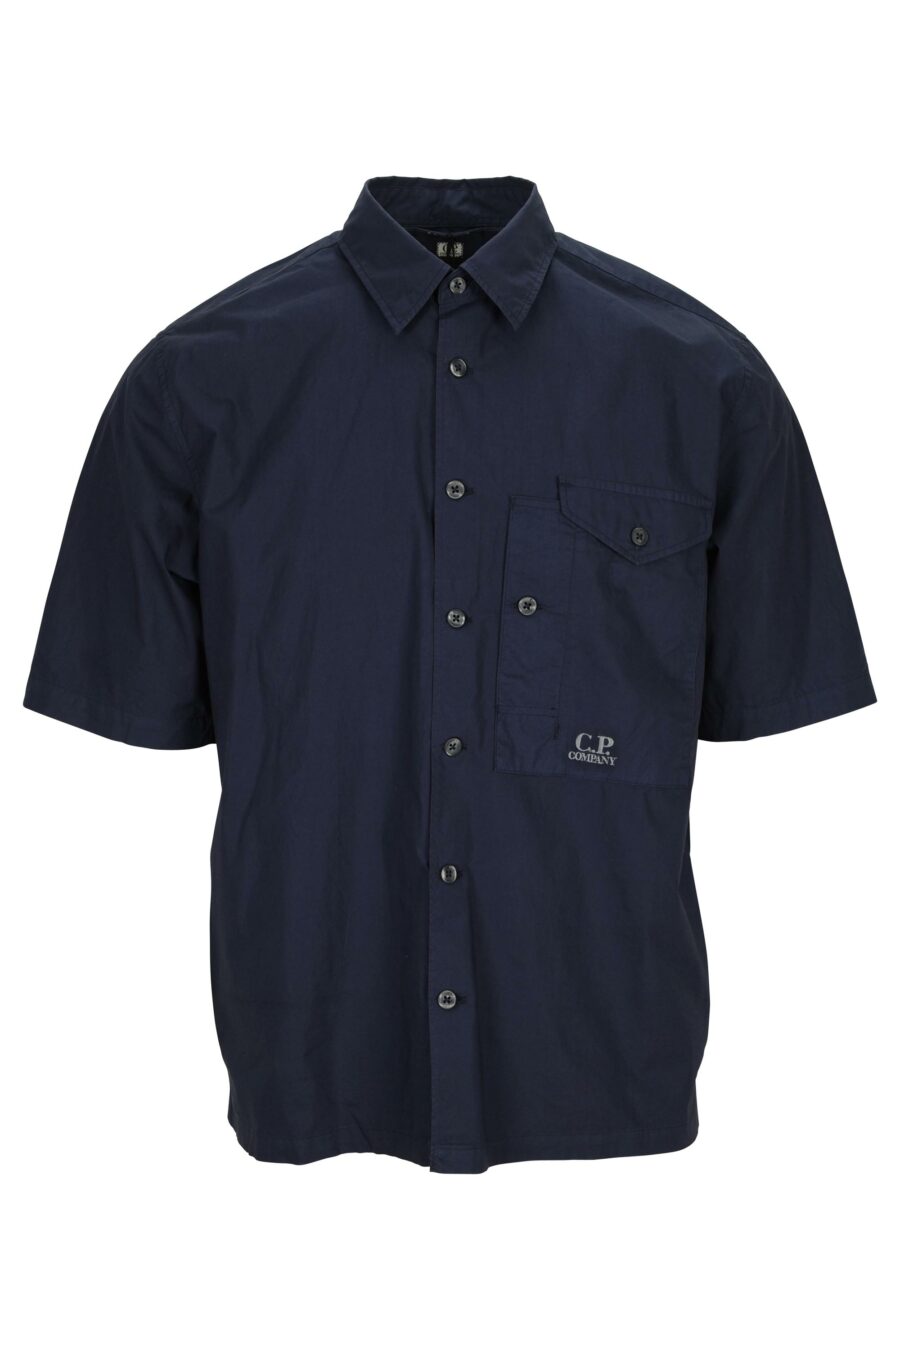 Dark blue short sleeve shirt with pocket and mini logo - 7620943811551